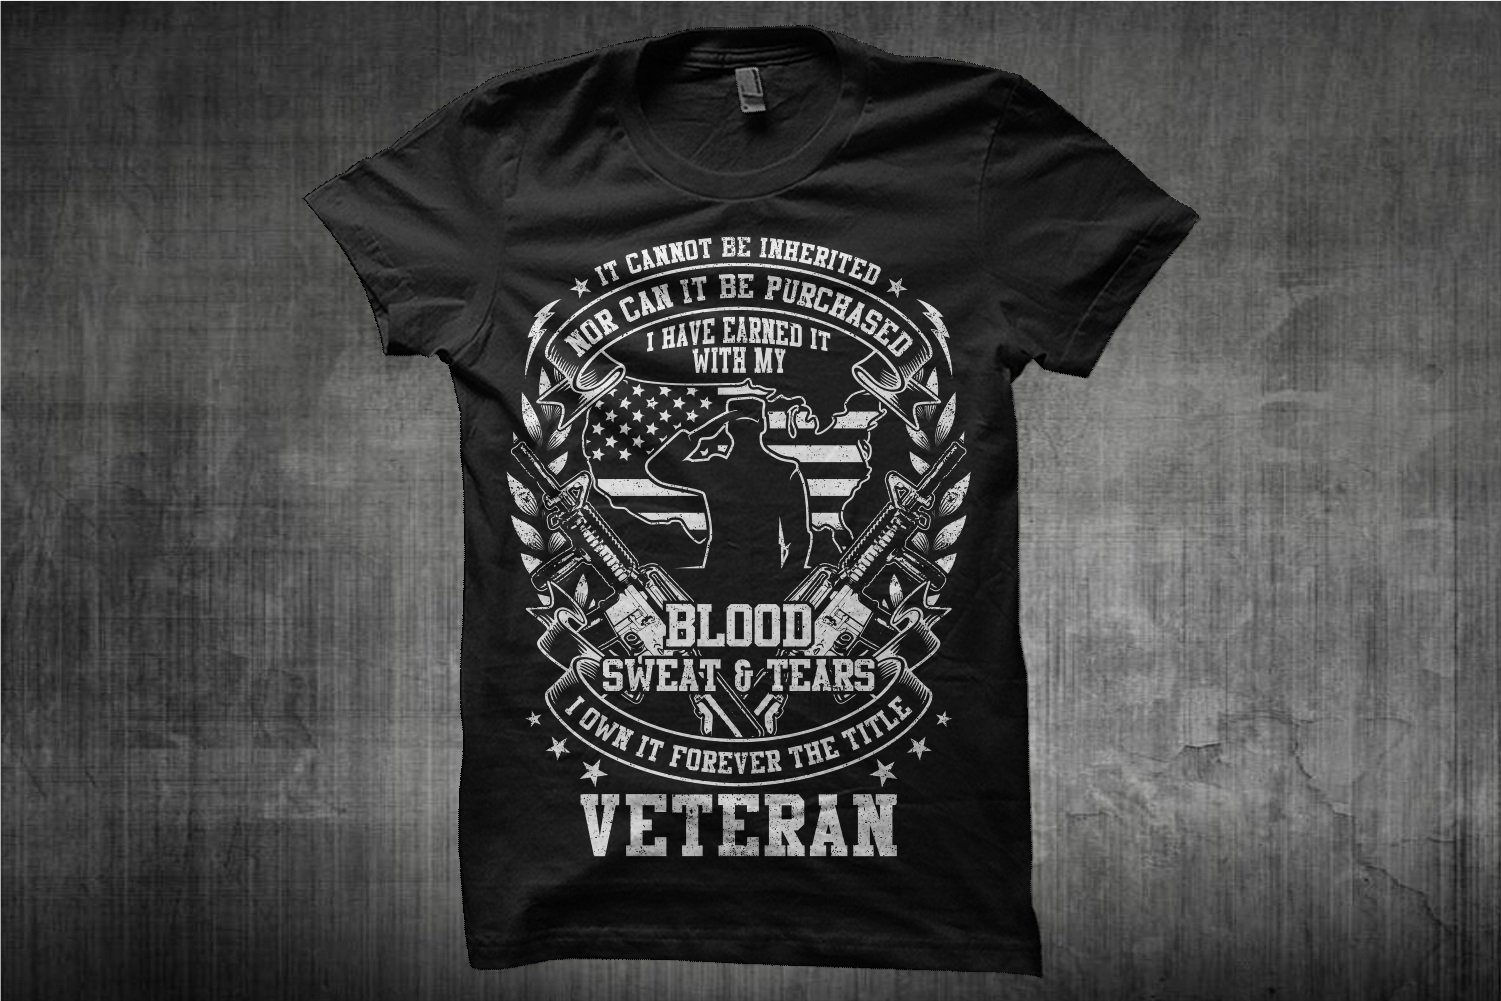 Black t-shirt with white veteran illustration.